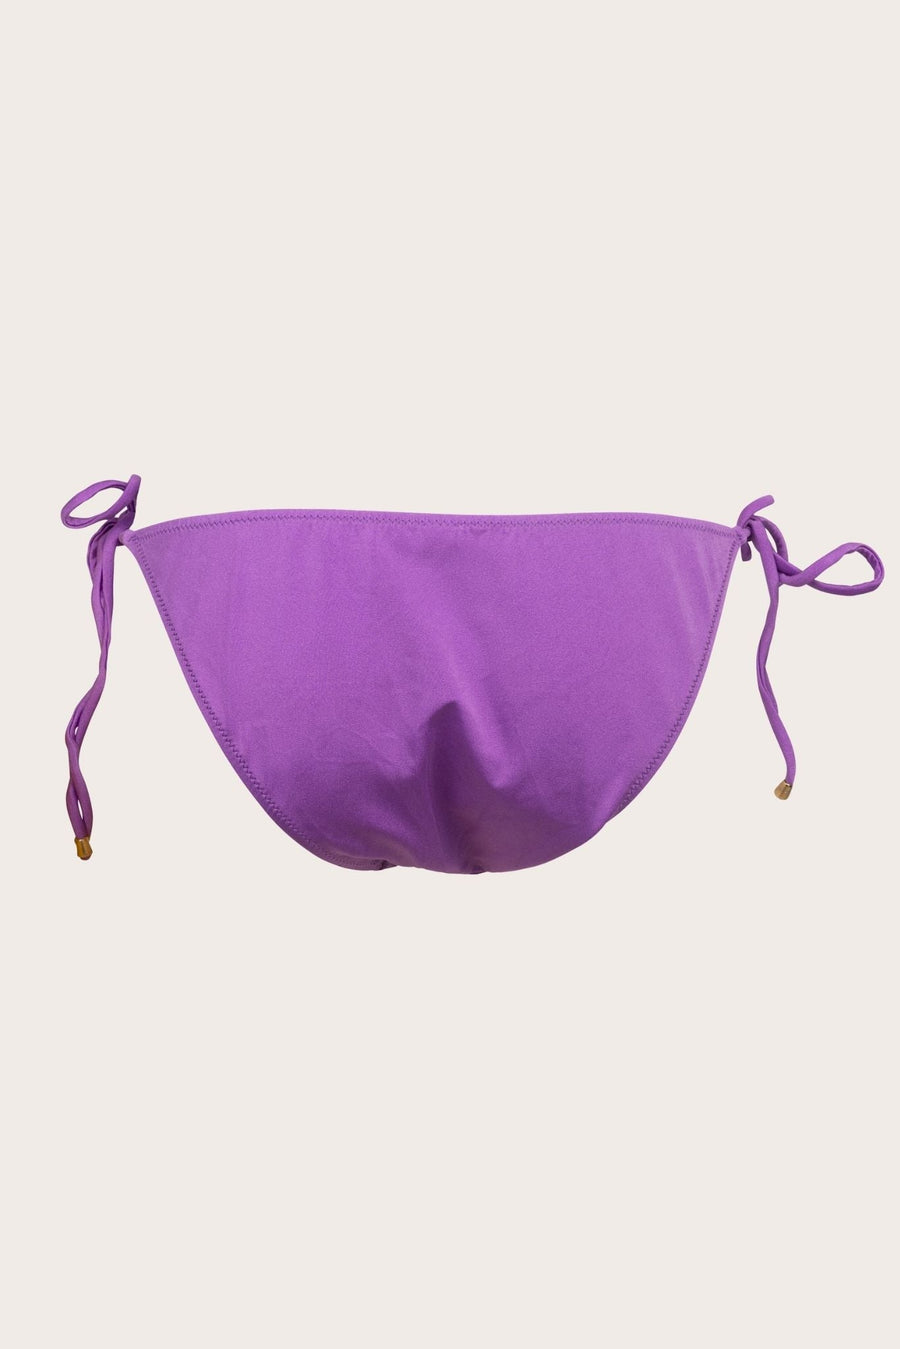 VendelaWear Truse Bikini truse - Mykonos - Ultra Violet